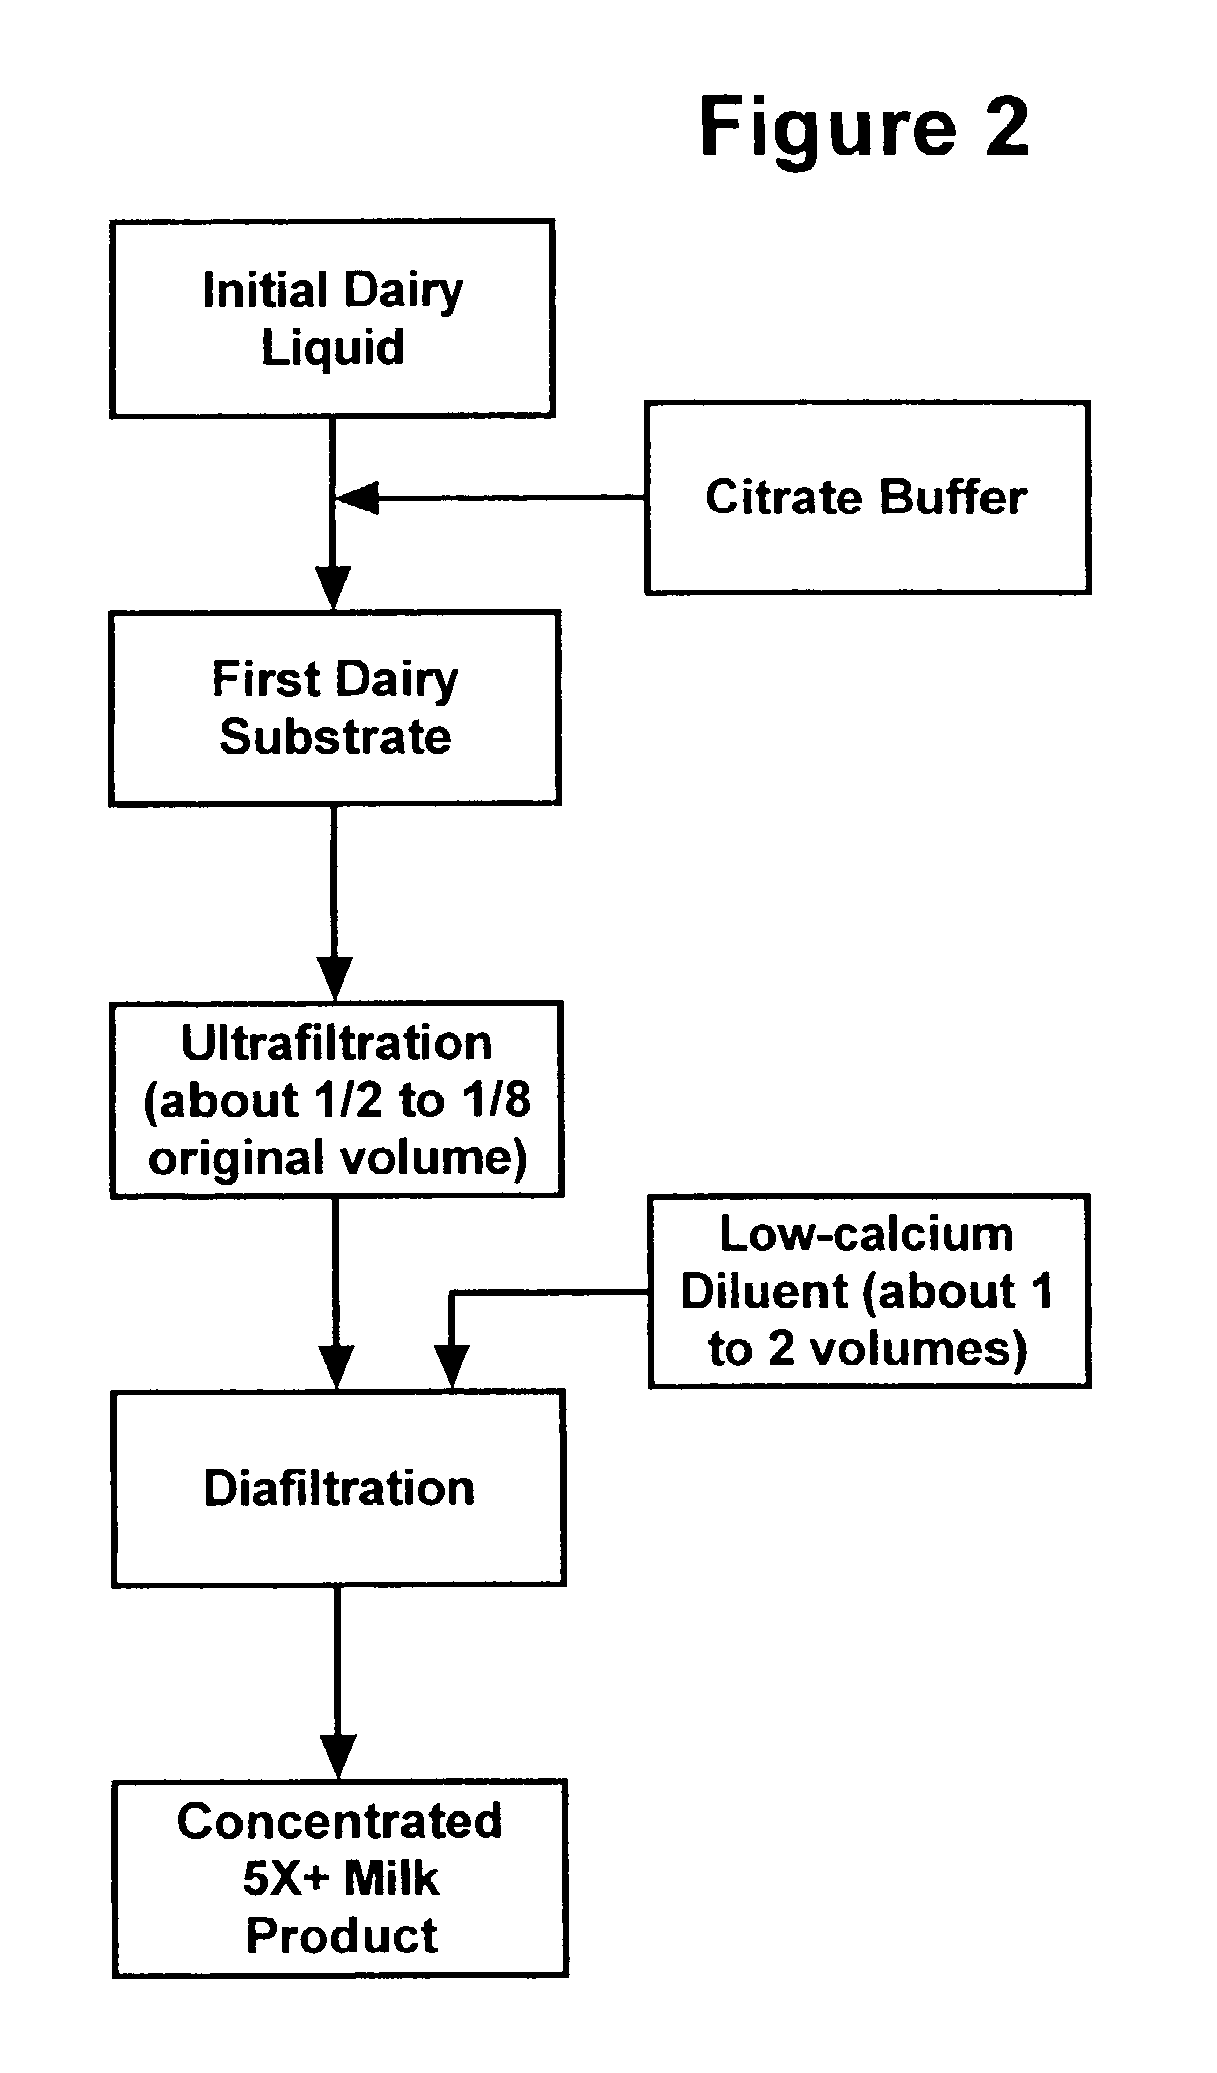 Non-gelling milk concentrates